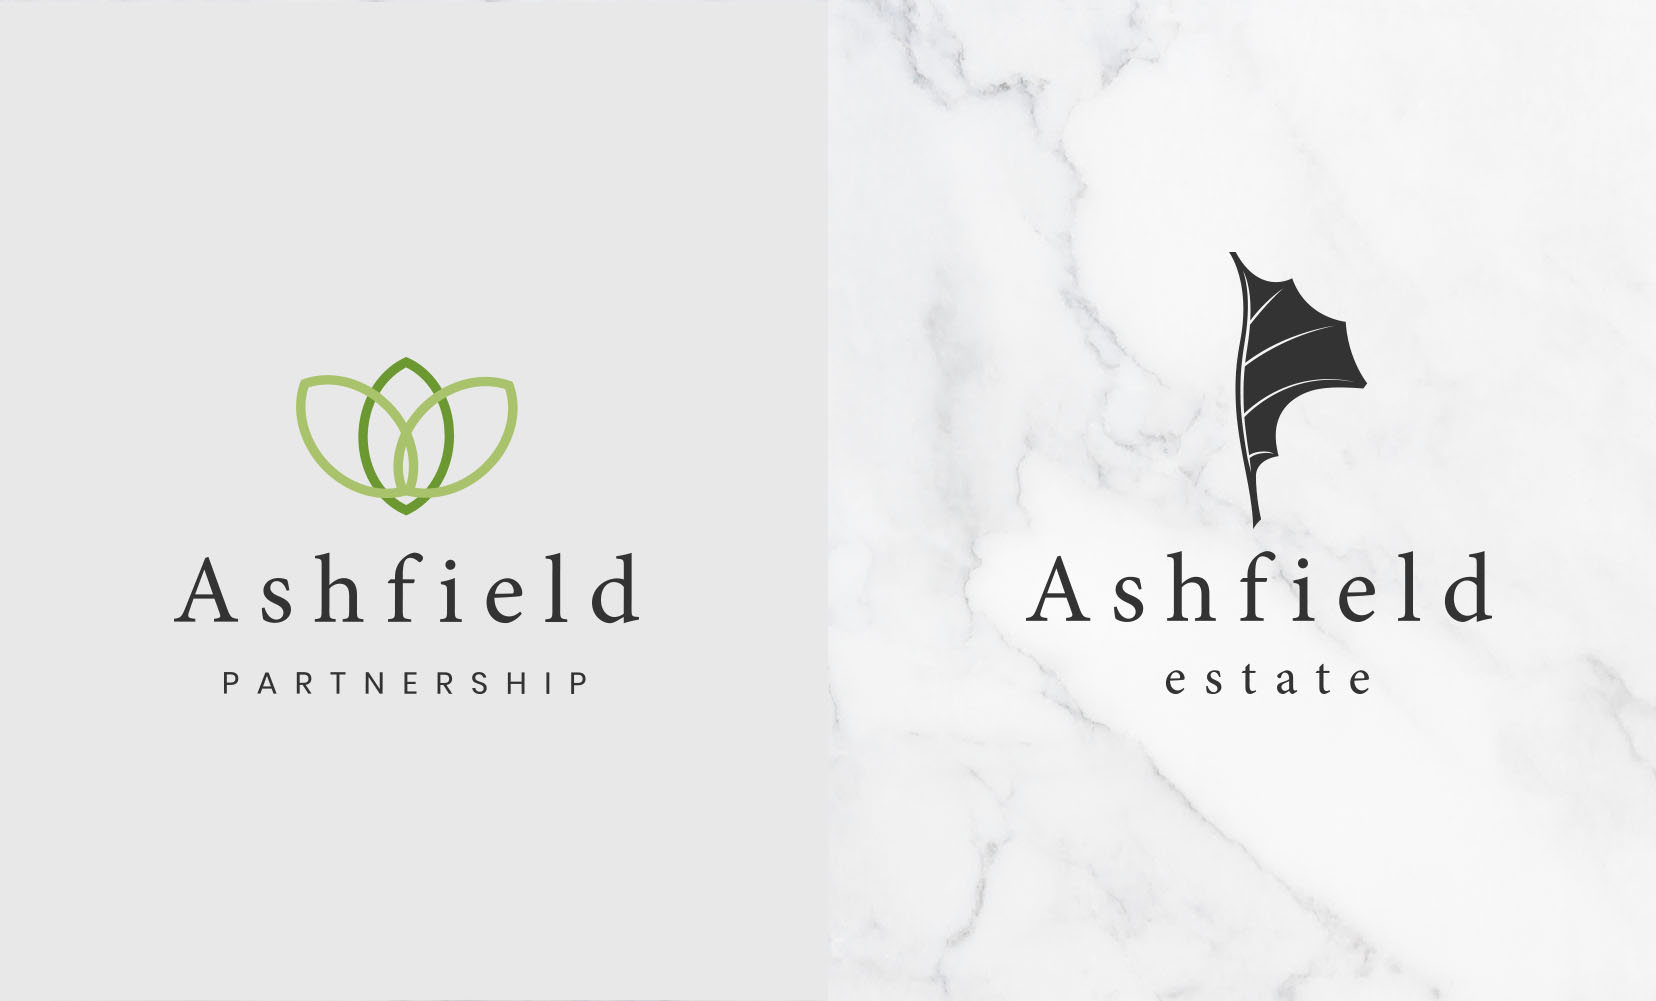 Ashfield Partnership branding alongside the existing Estate logo